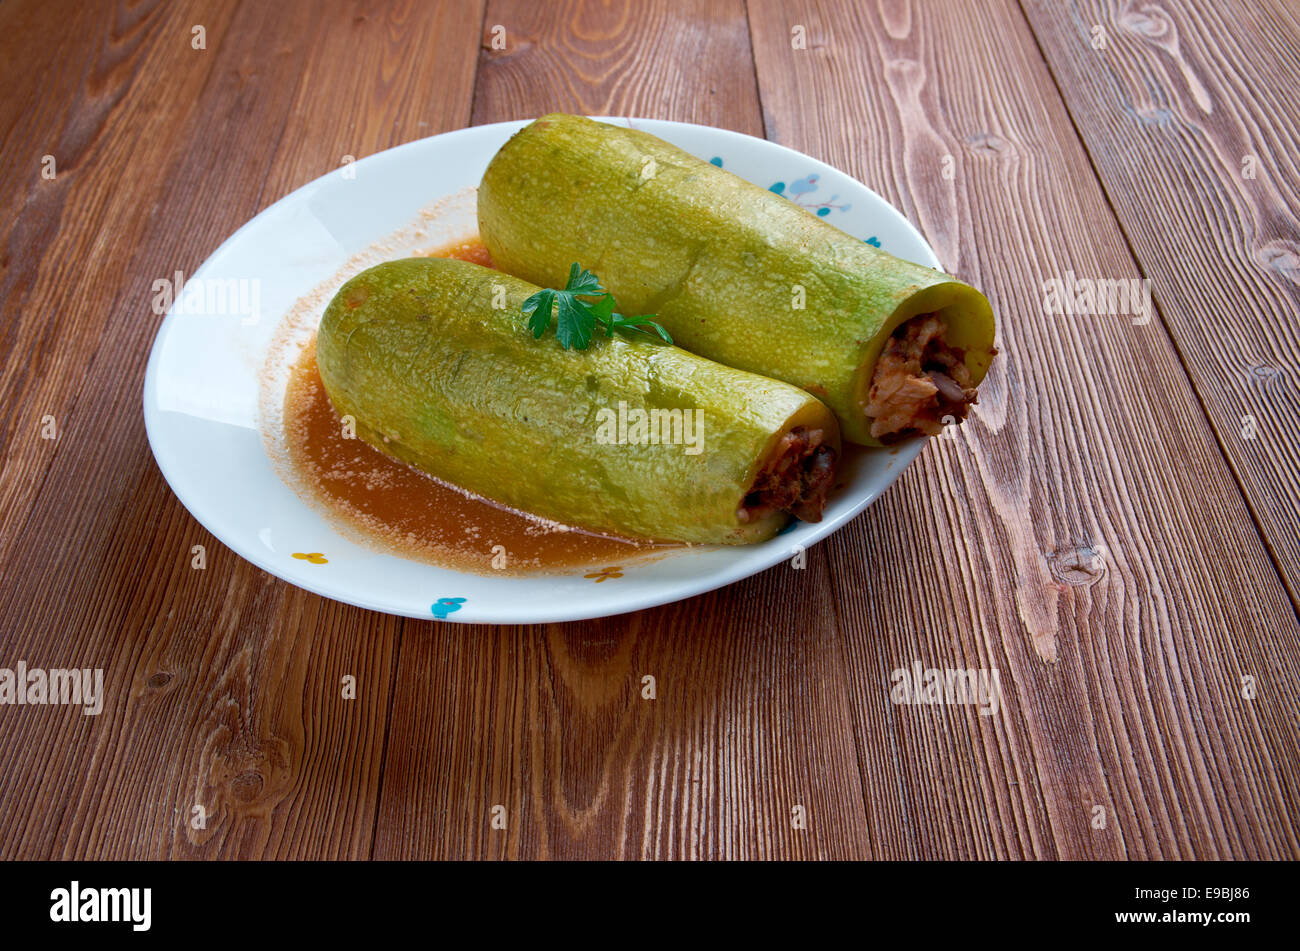 https://c8.alamy.com/comp/E9BJ86/kousa-mahshi-zucchini-stuffed-with-rice-and-meats-made-in-egypt-syria-E9BJ86.jpg